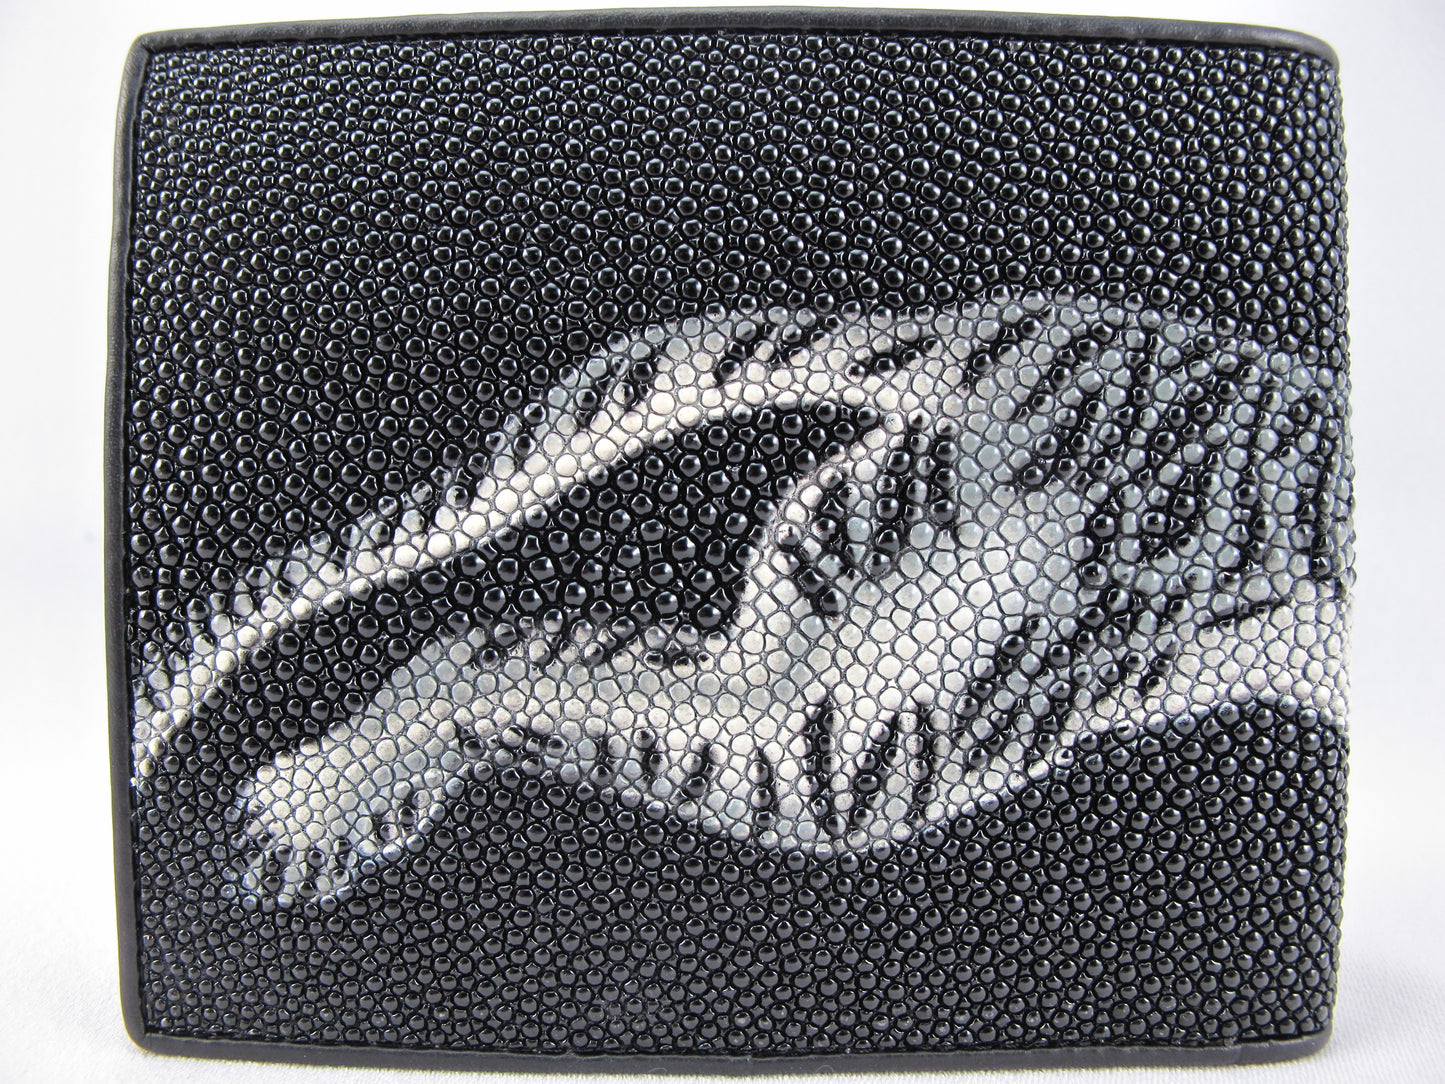 Genuine Stingray Skin Leather Bifold Men's Wallet Tiger Printed